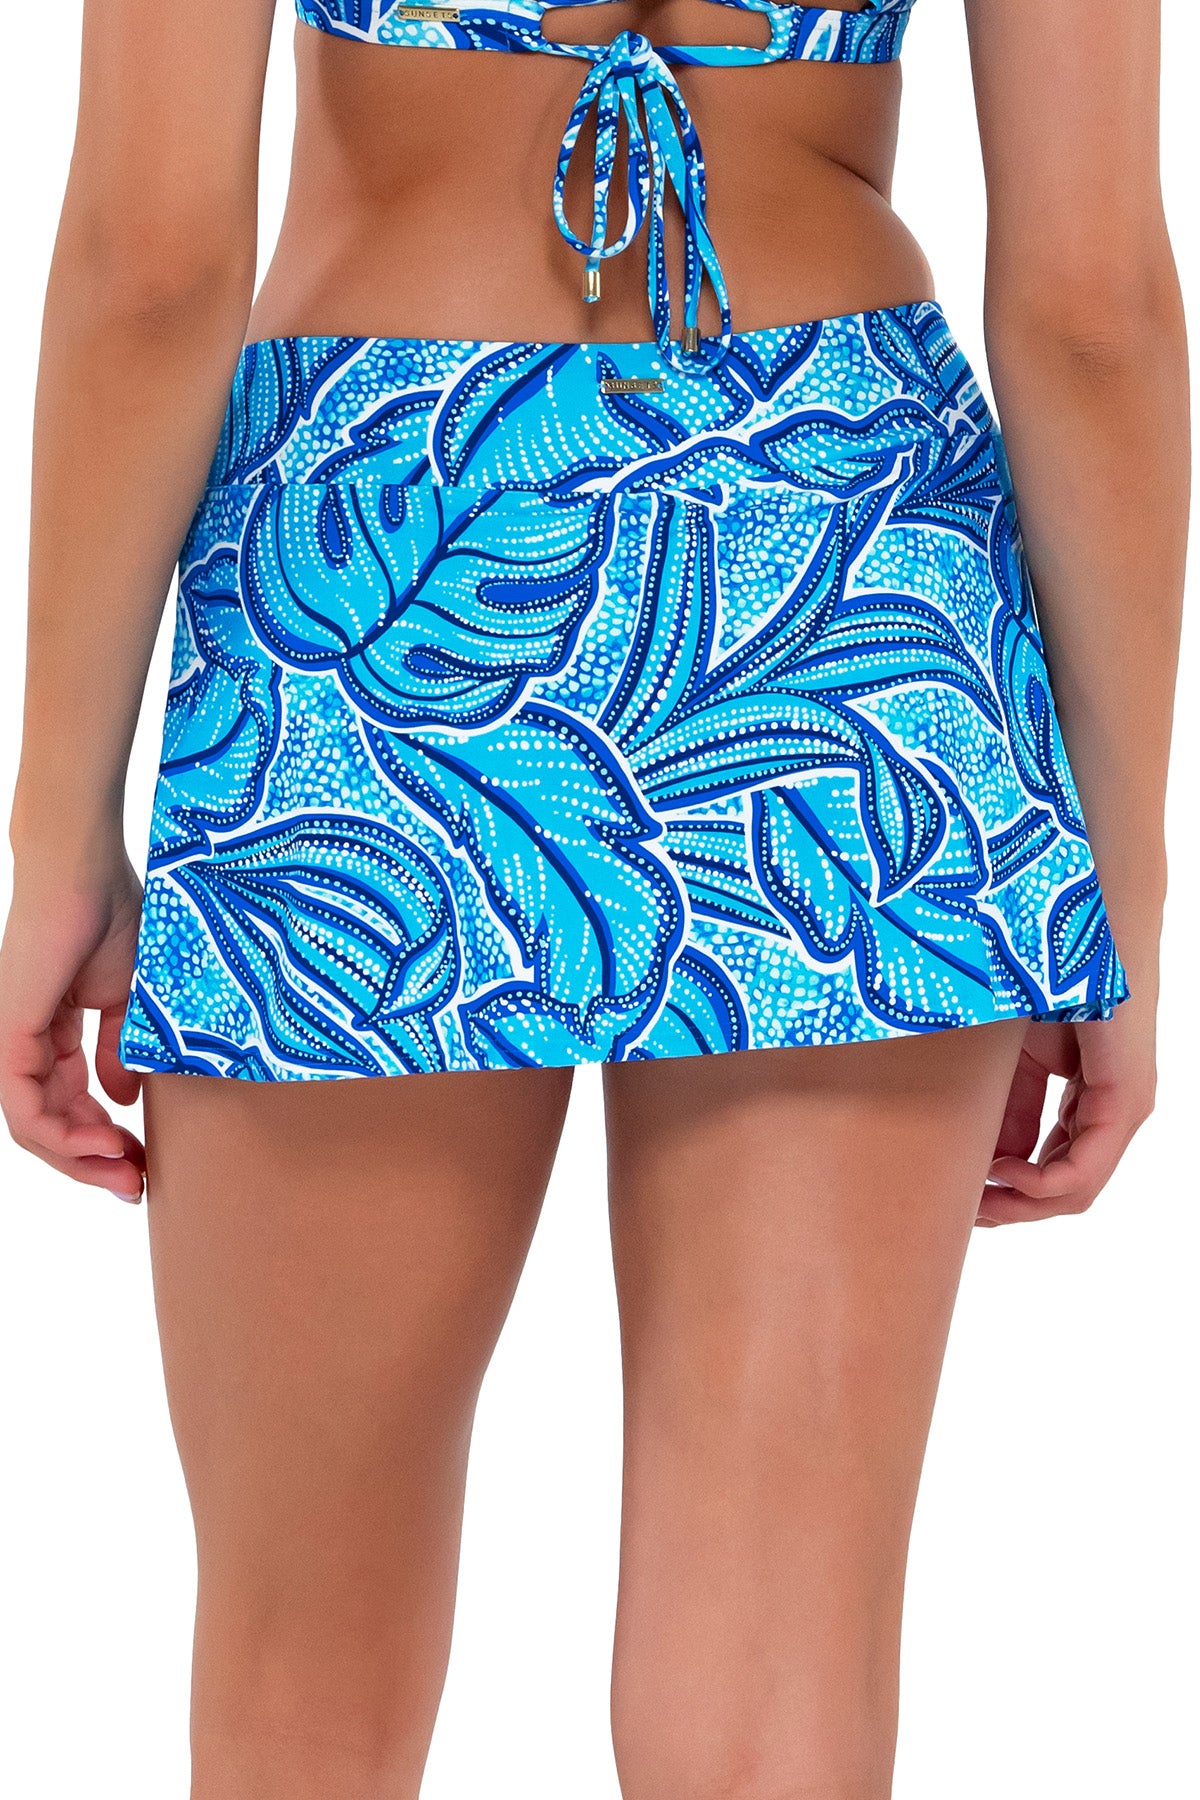 Back pose #1 of Daria wearing Sunsets Seaside Vista Sporty Swim Skirt